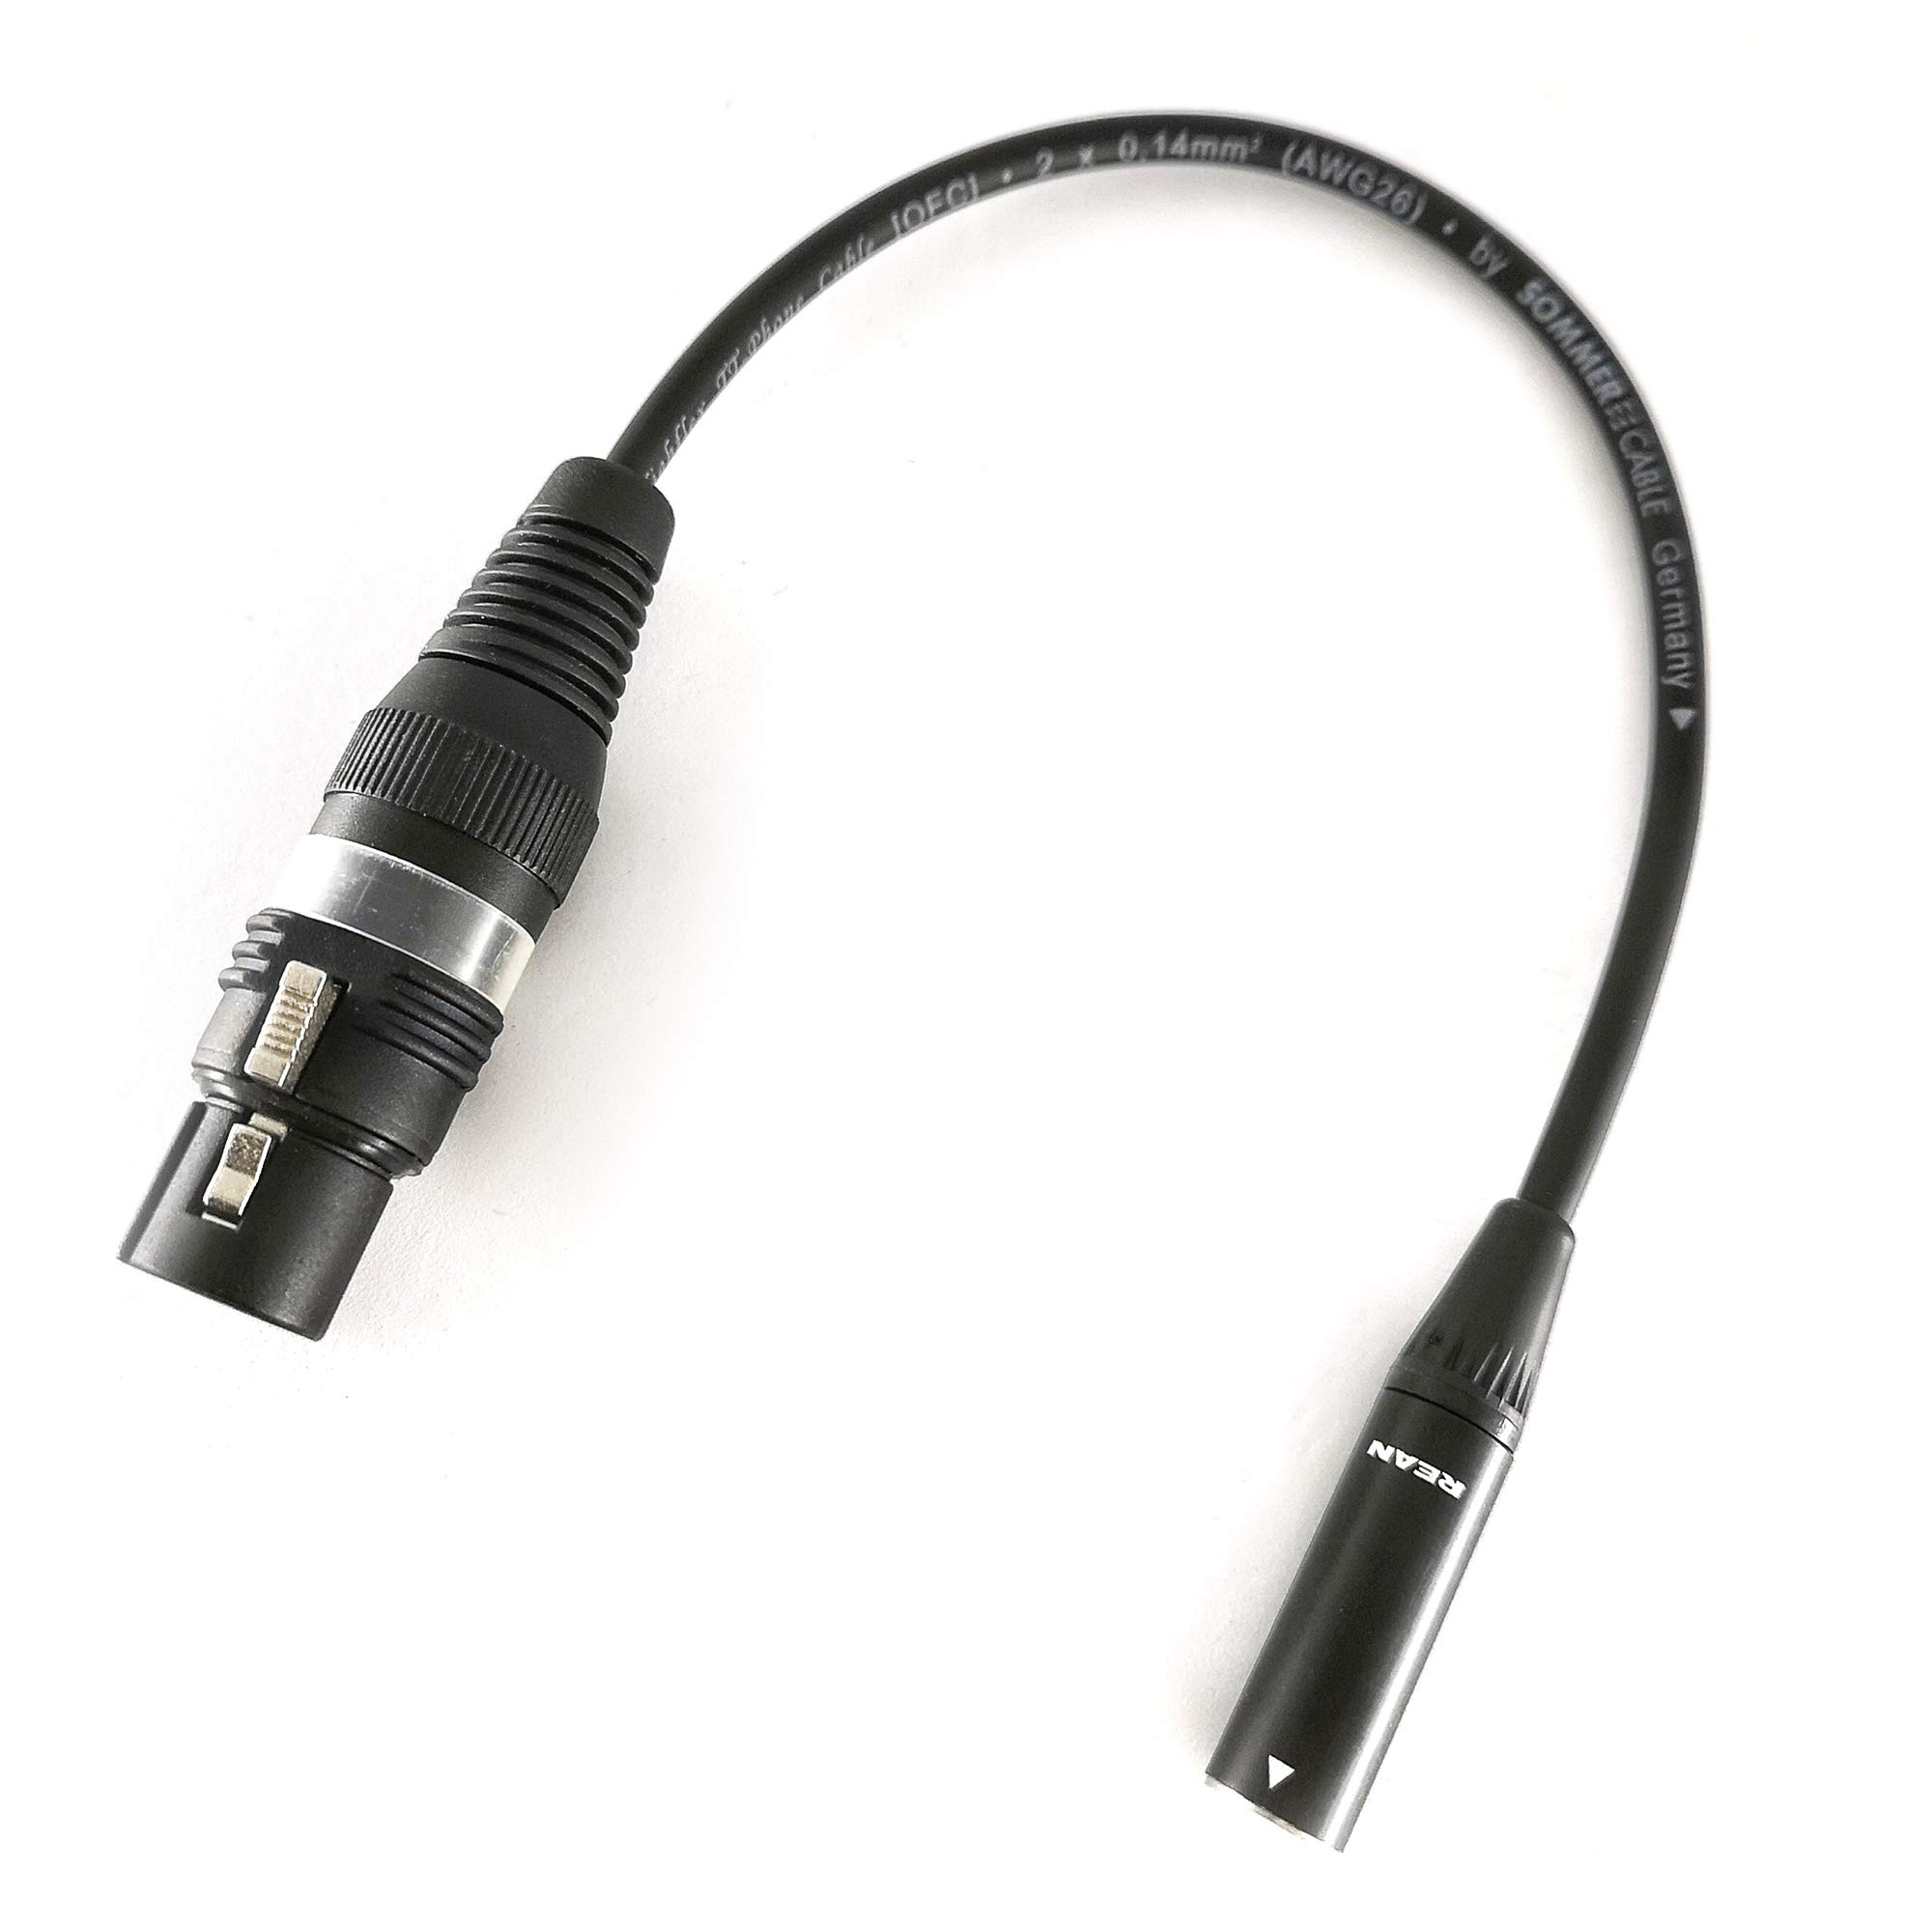 Selected Cable 50cm Mini -XLR Male auf XLR Female für Blackmagic 6K 4K BMPCC Audio- Mikrofon Kabel SC-AK-mXLR-XLR - 0,5m / 1.64 ft